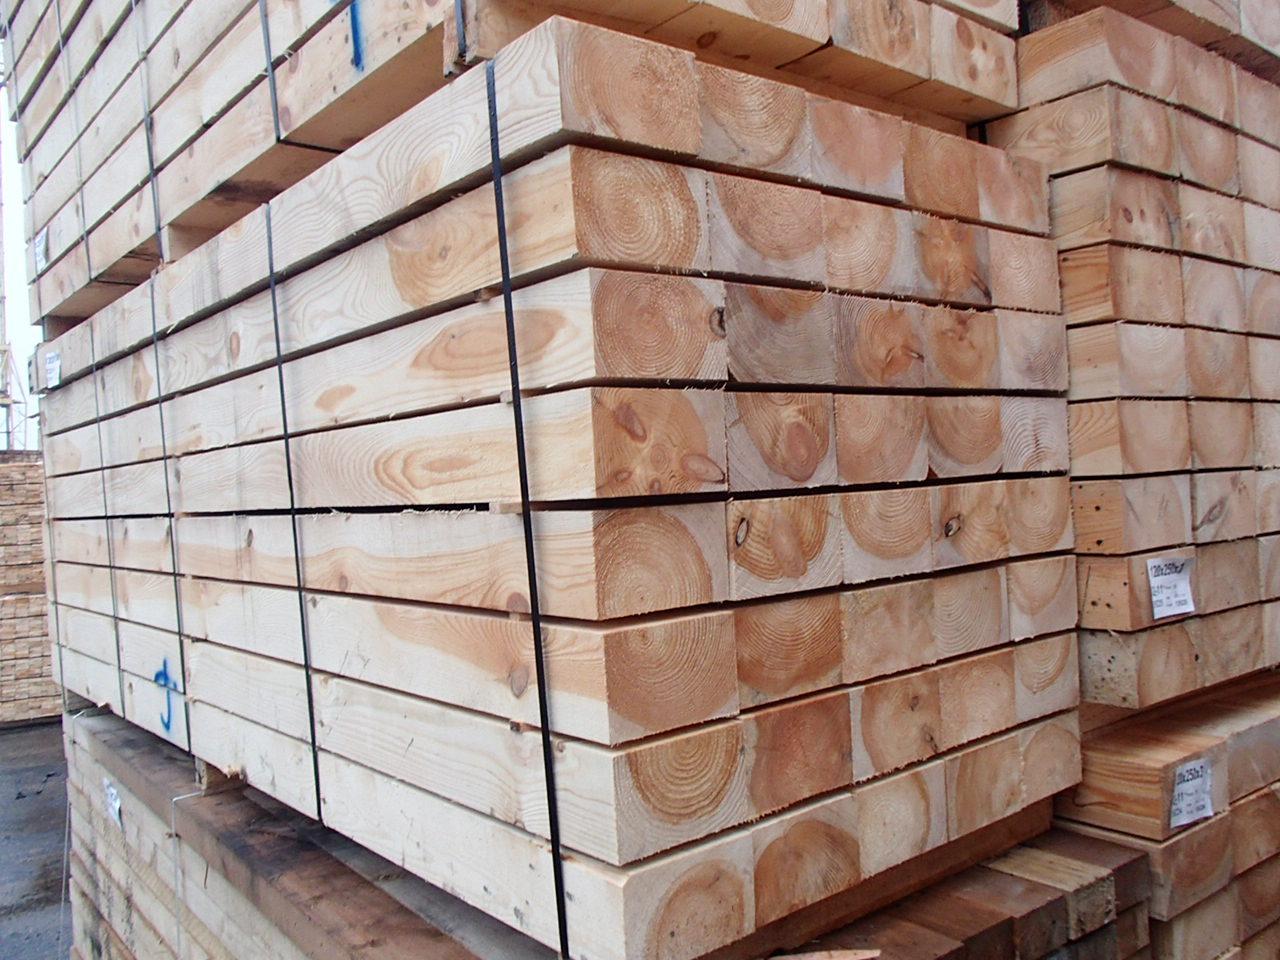 Euro Trading Company is leading timber merchant agency in Latvia